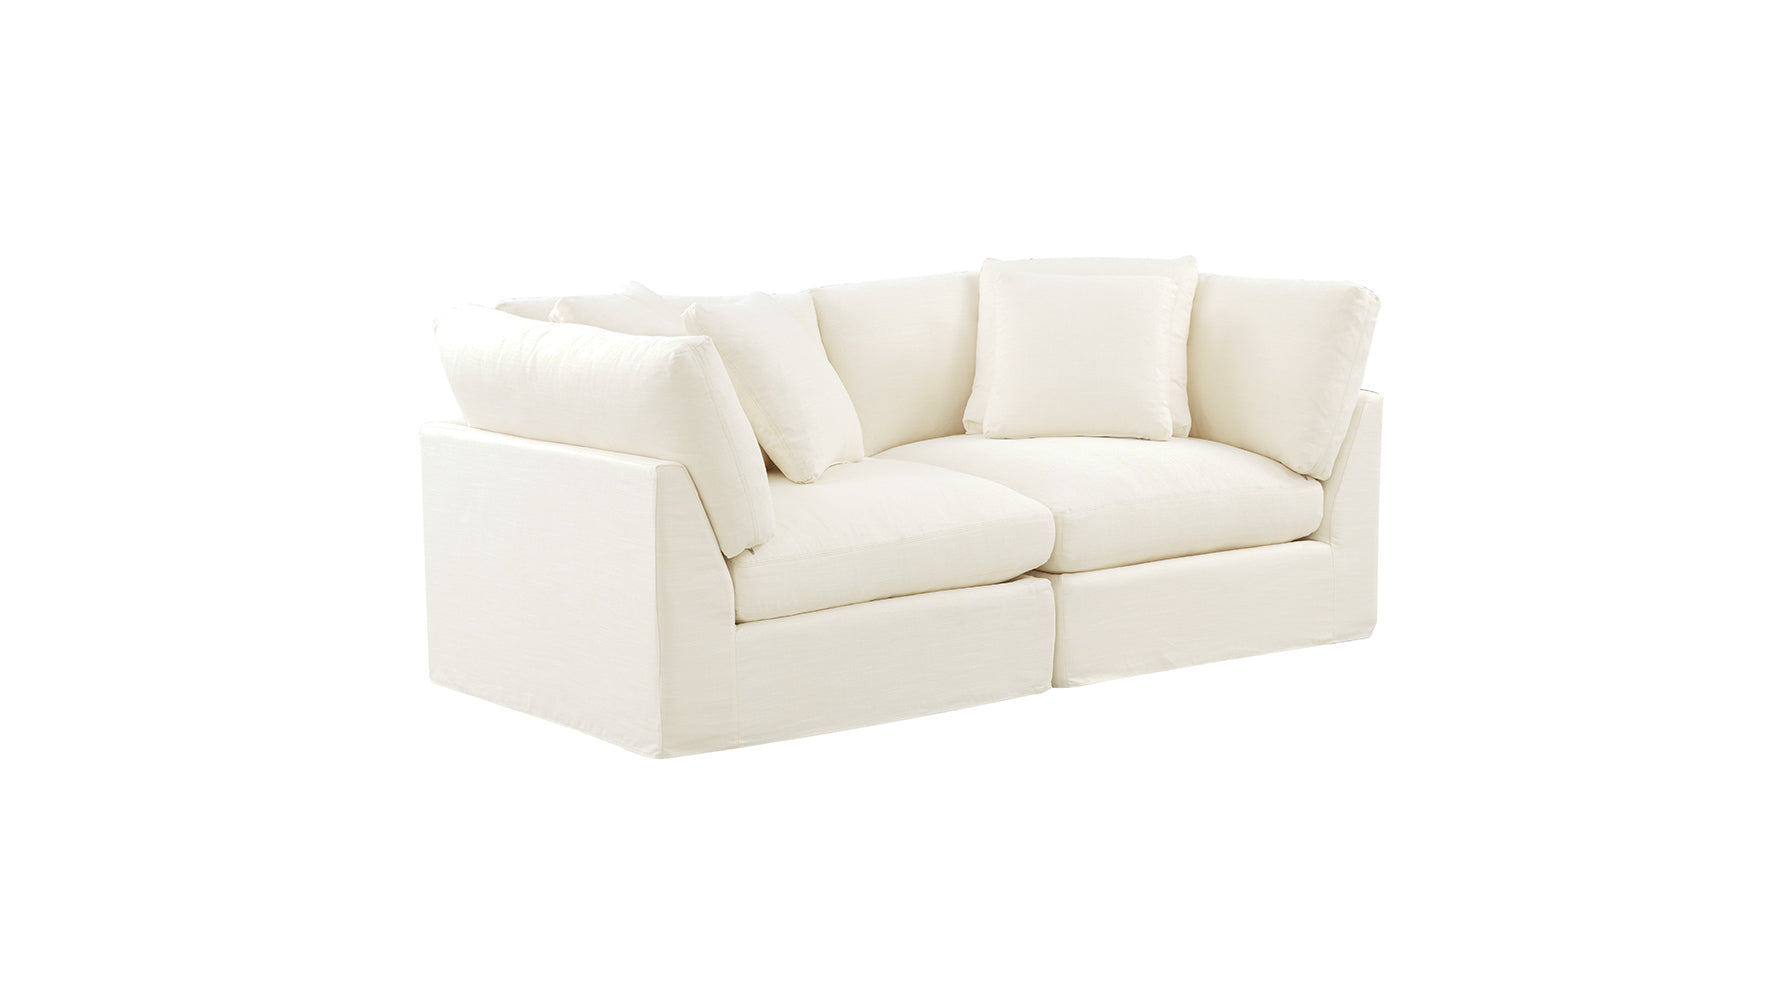 Get Together™ 2-Piece Modular Sofa, Large, Cream Linen - Image 3